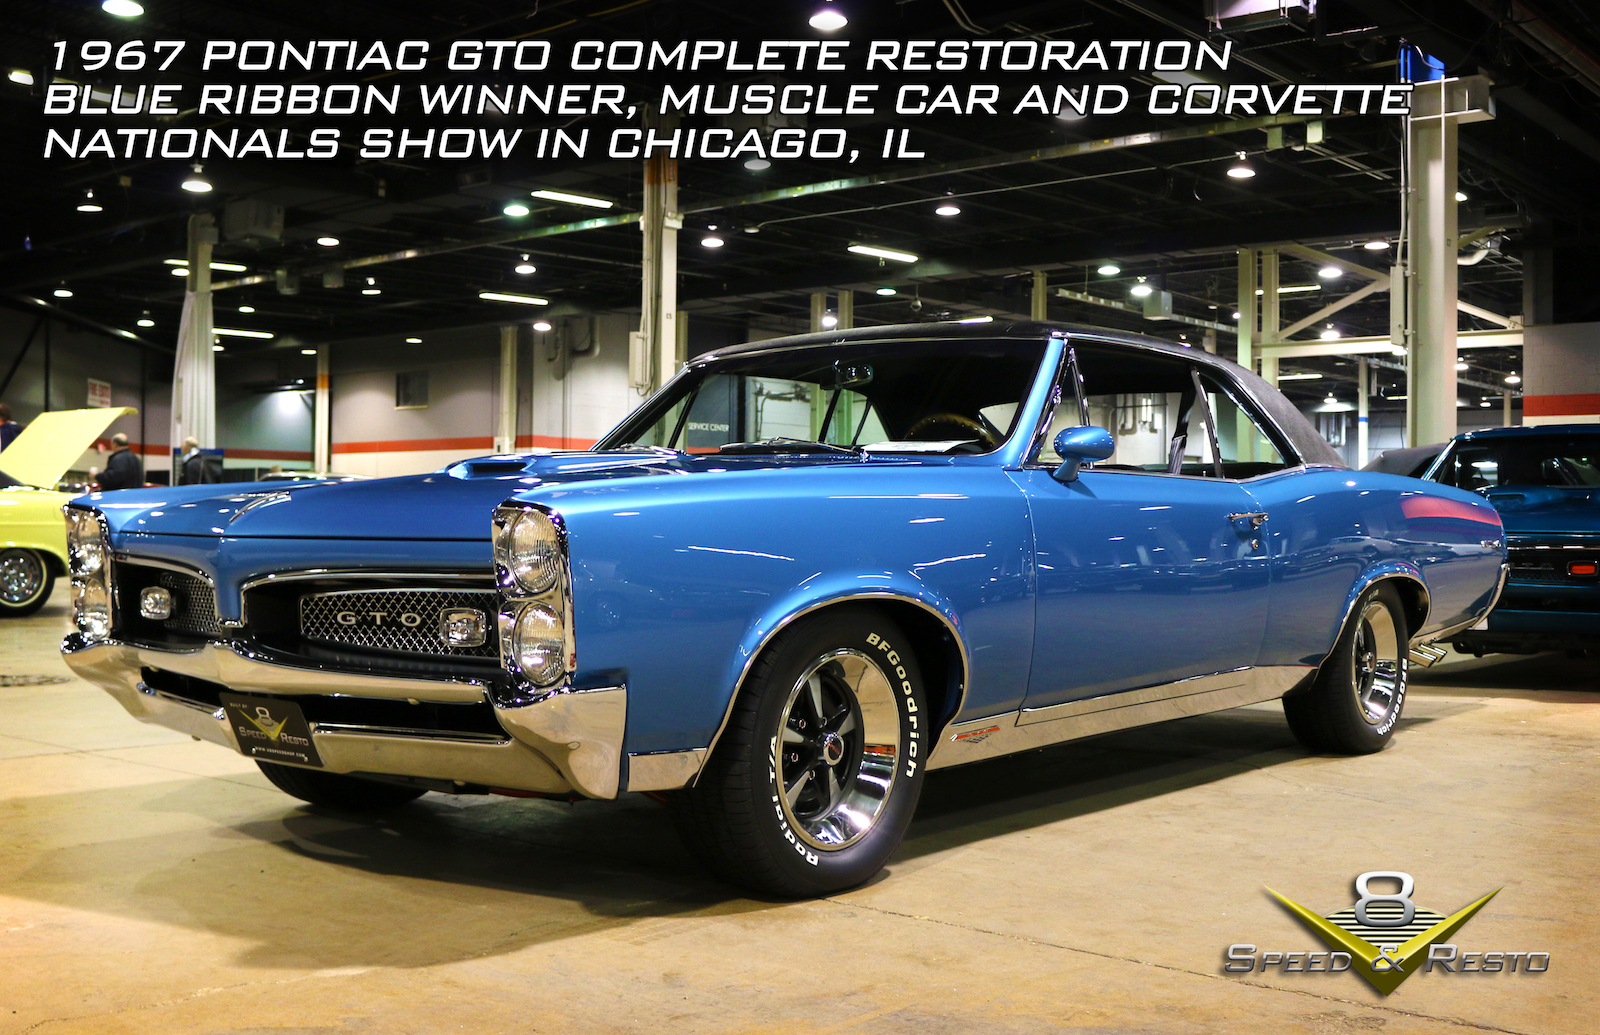 1967 Pontiac GTO Restoration Photo Gallery at V8 Speed and Resto Shop